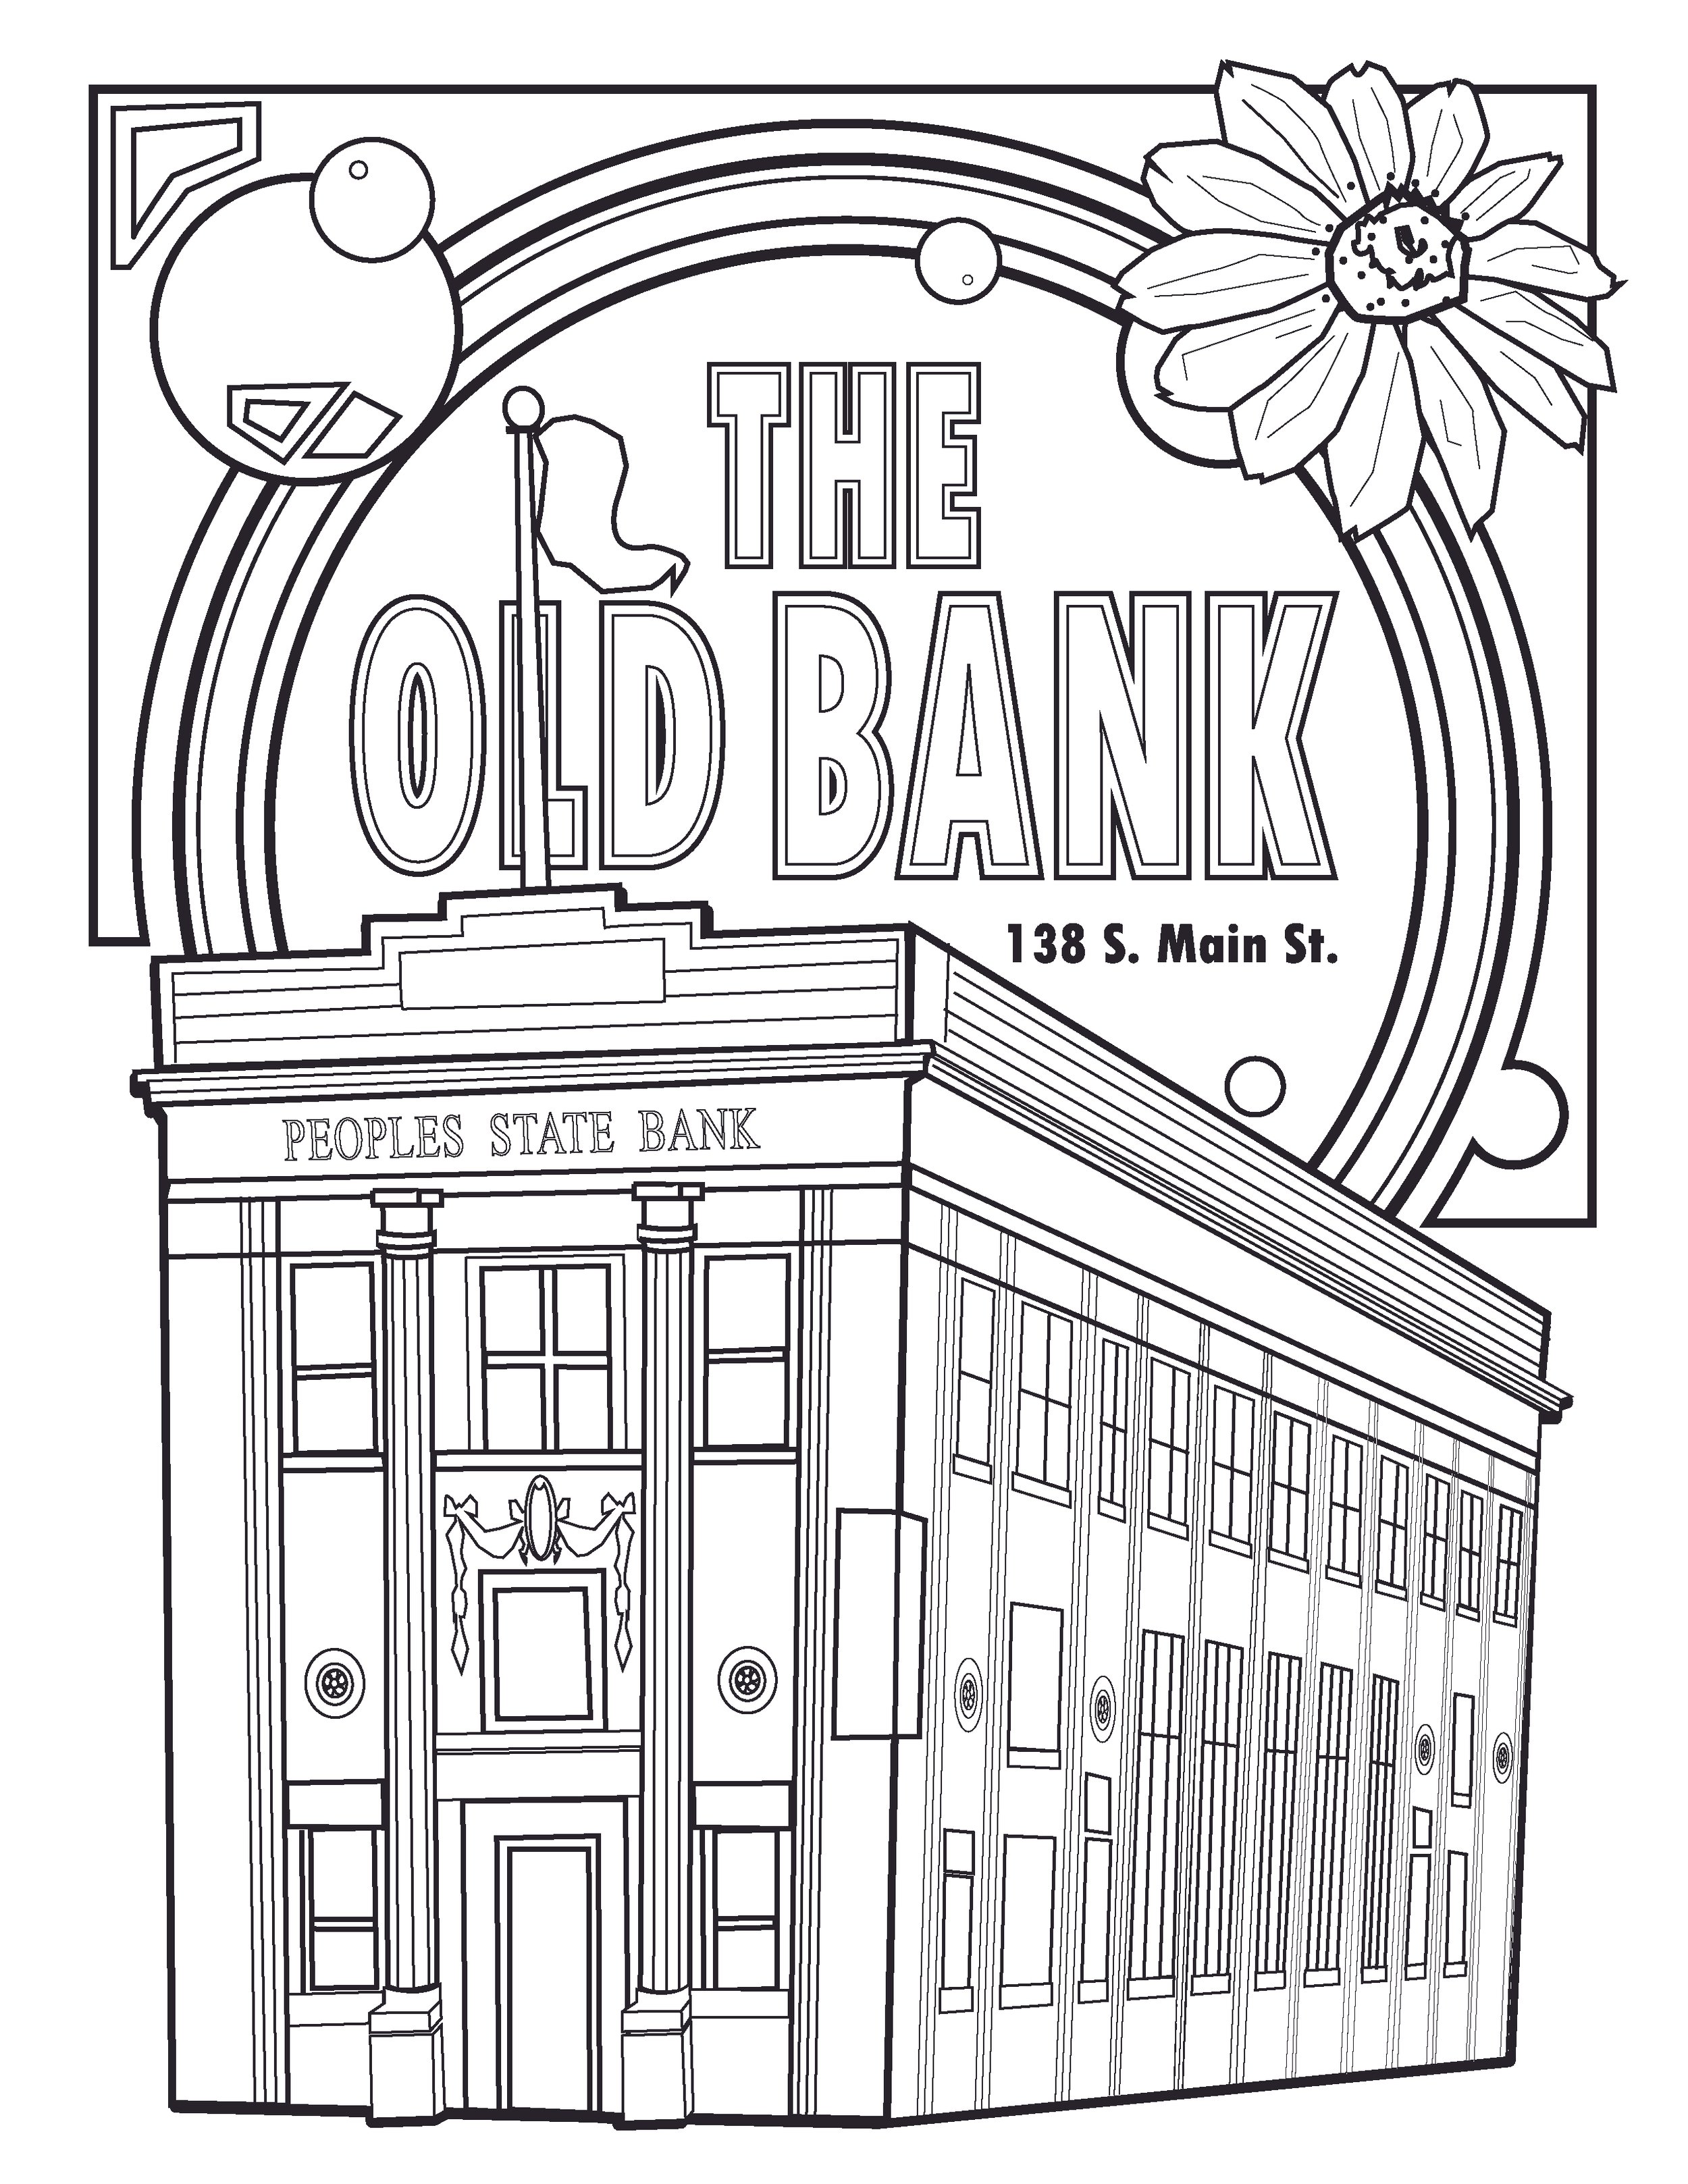 9 old bank building.jpg